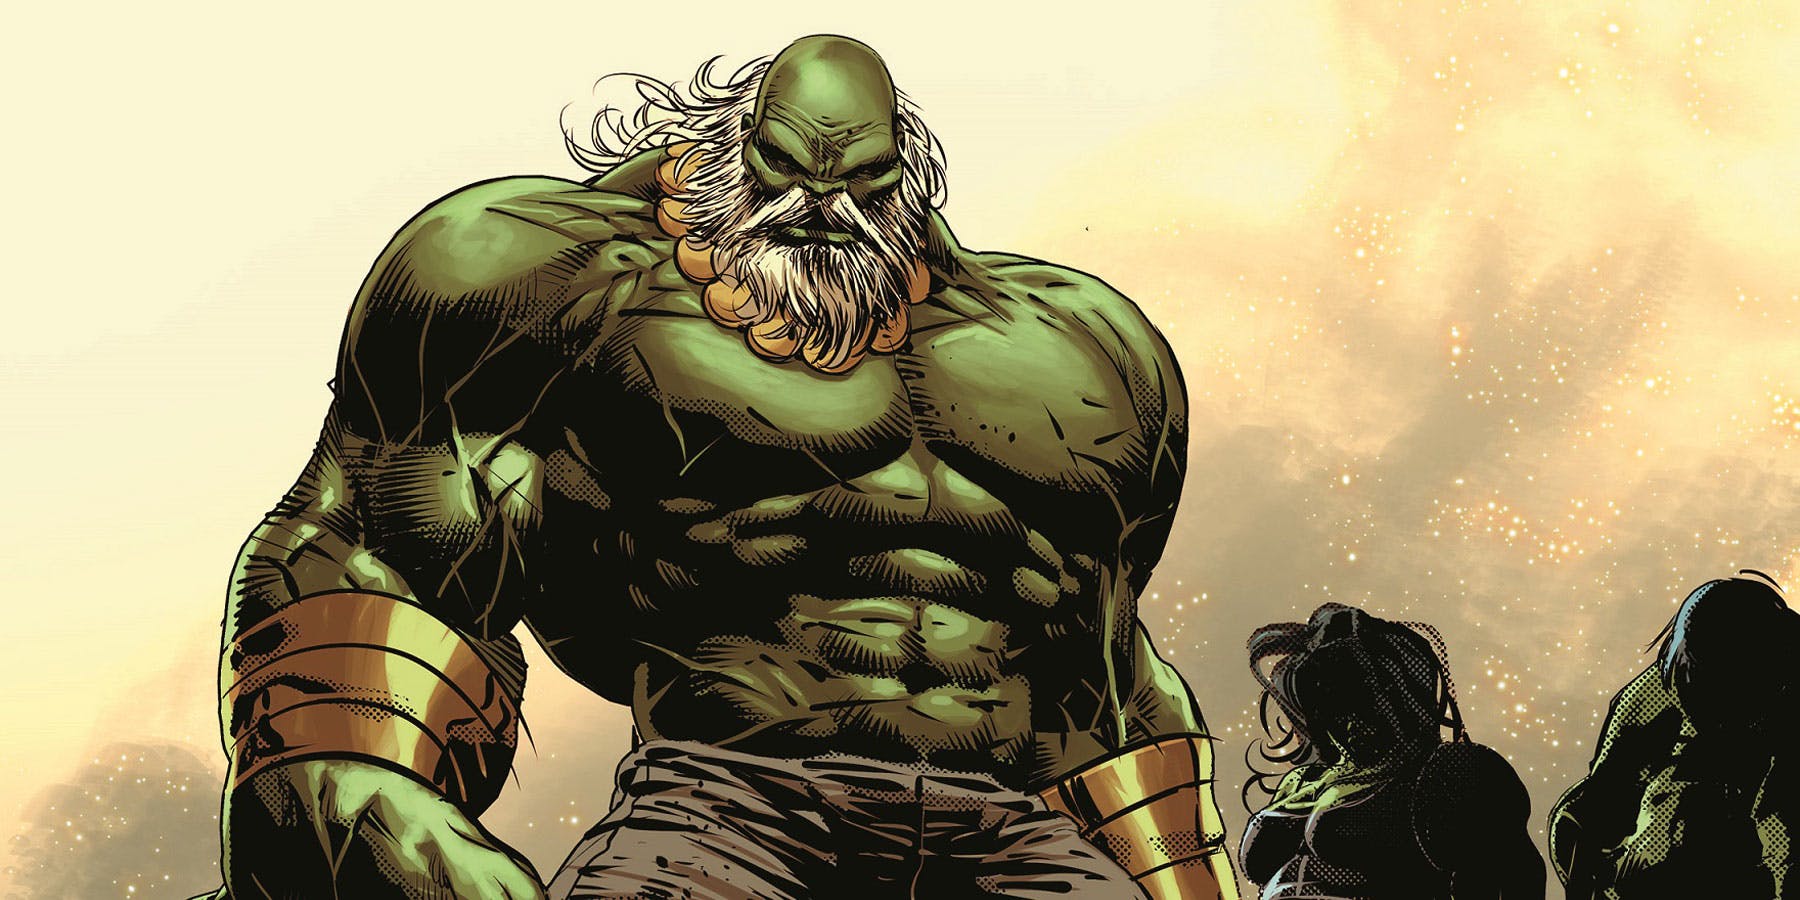 Bearded Hulk